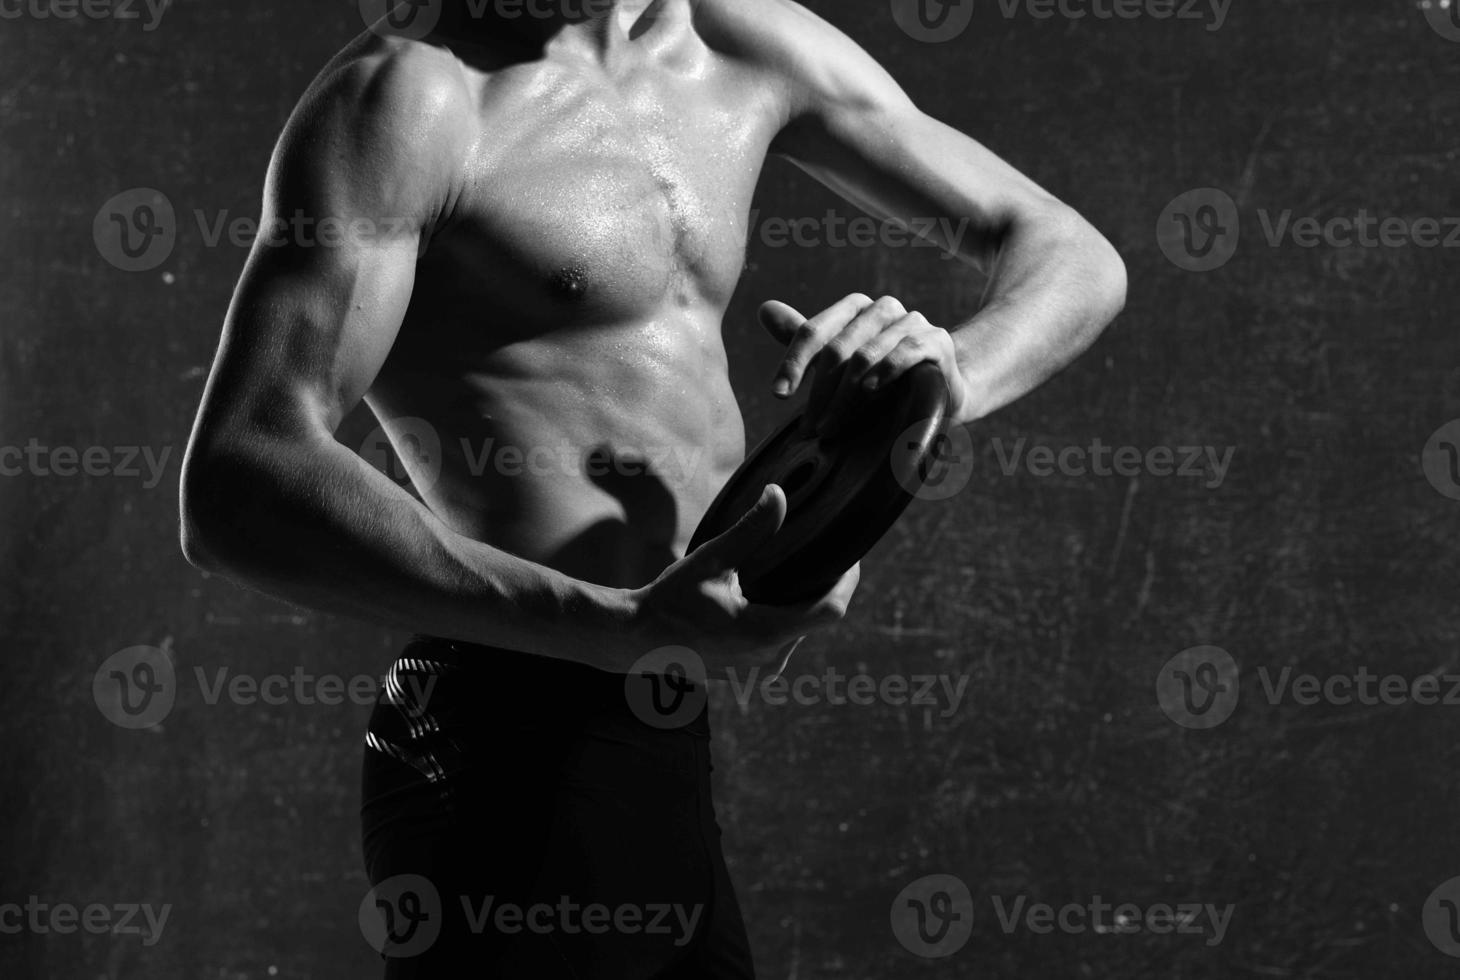 masculino atlético físico recortado ver músculo oscuro antecedentes foto